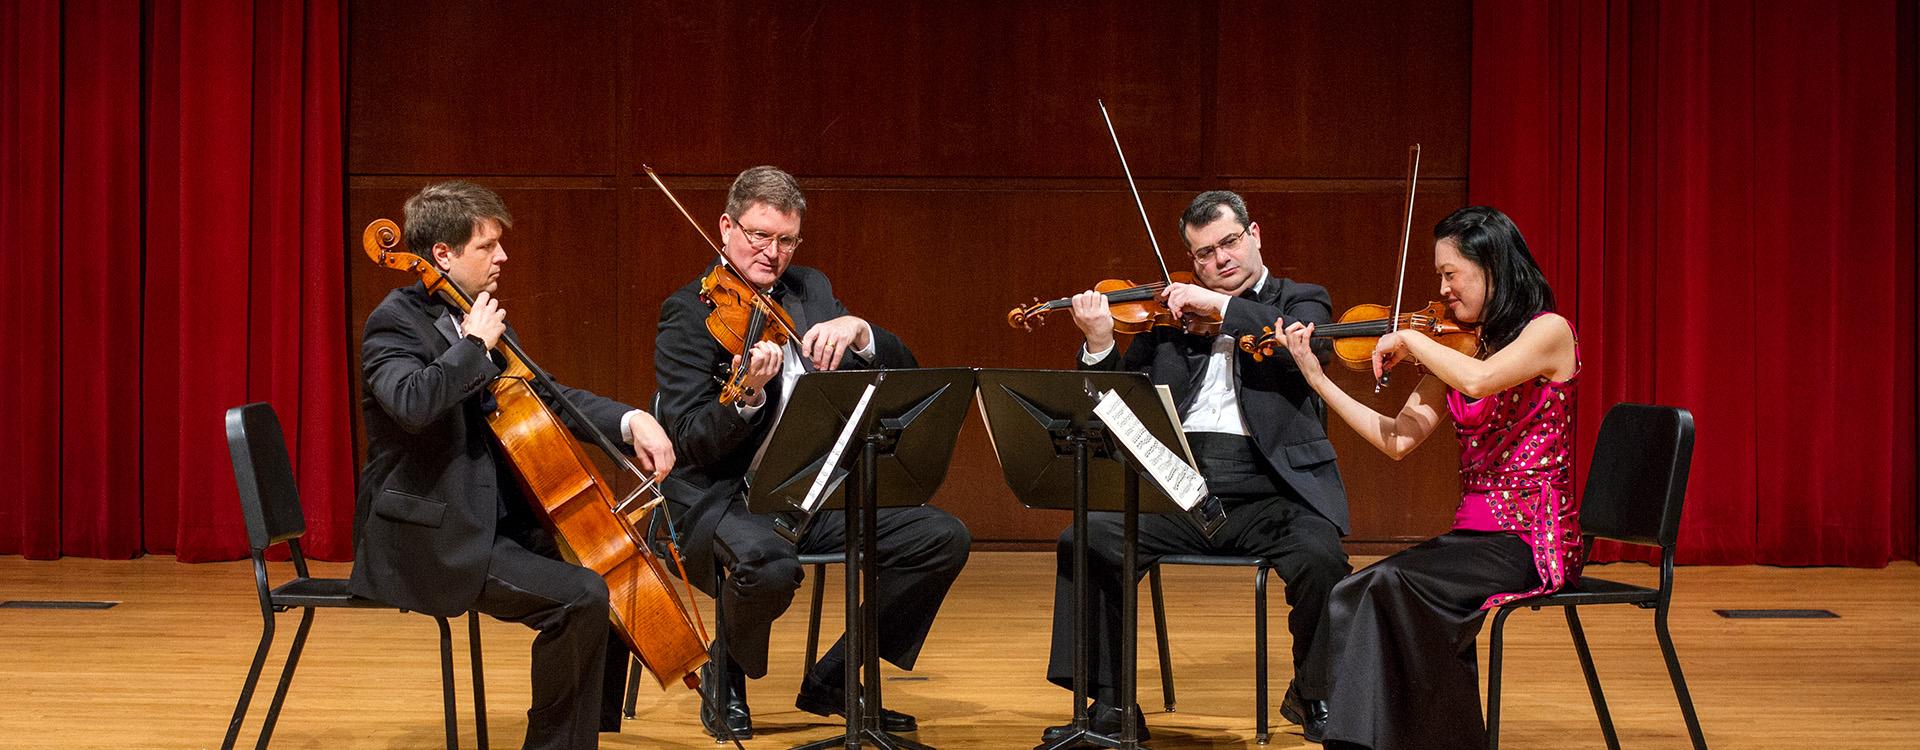 Philomusica Quartet on Schwan Concert Hall stage with instruments